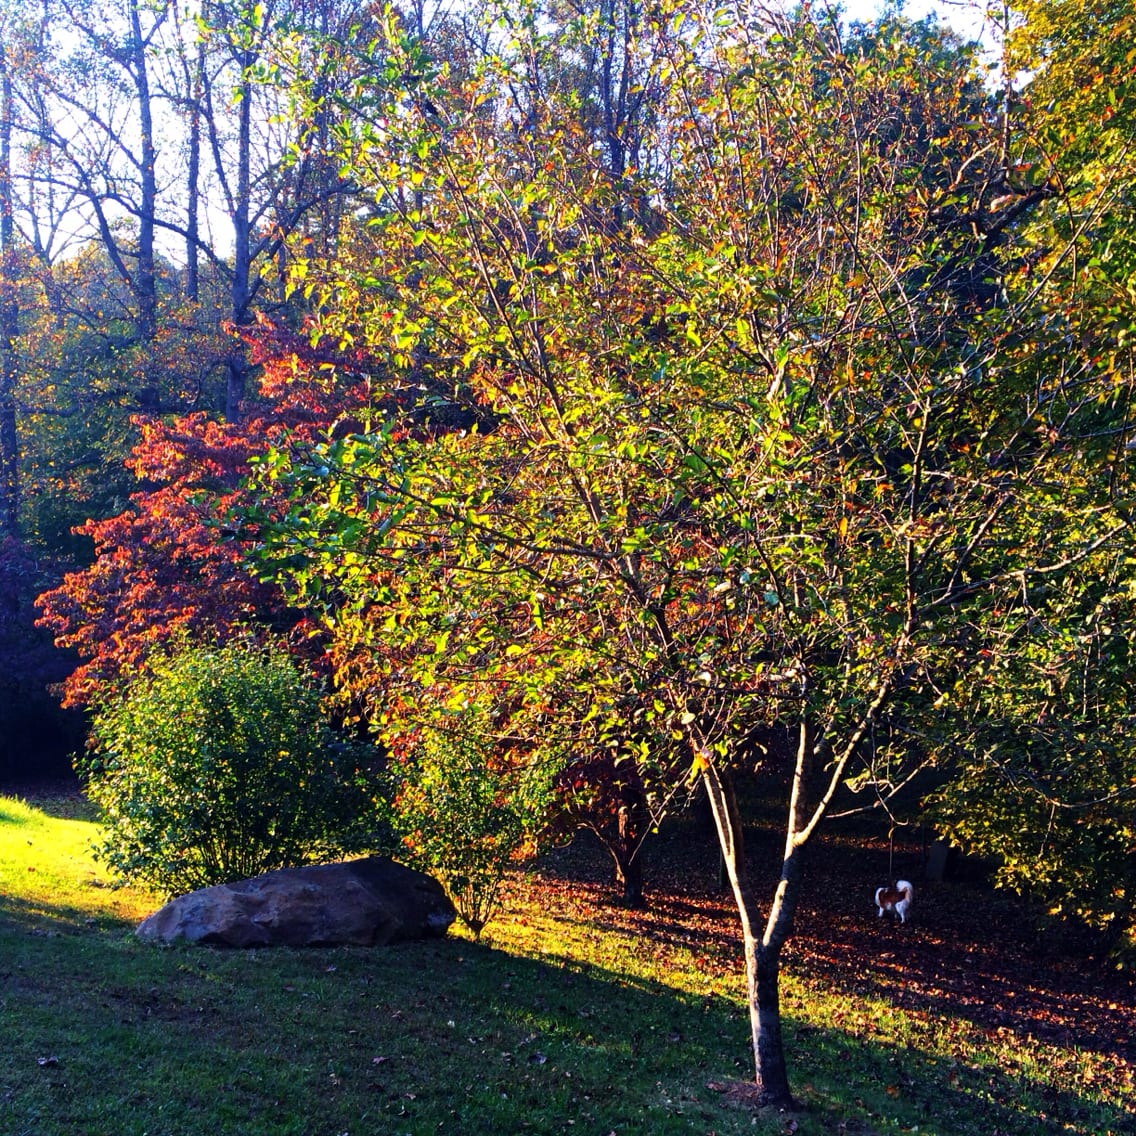 Backyard turning colors